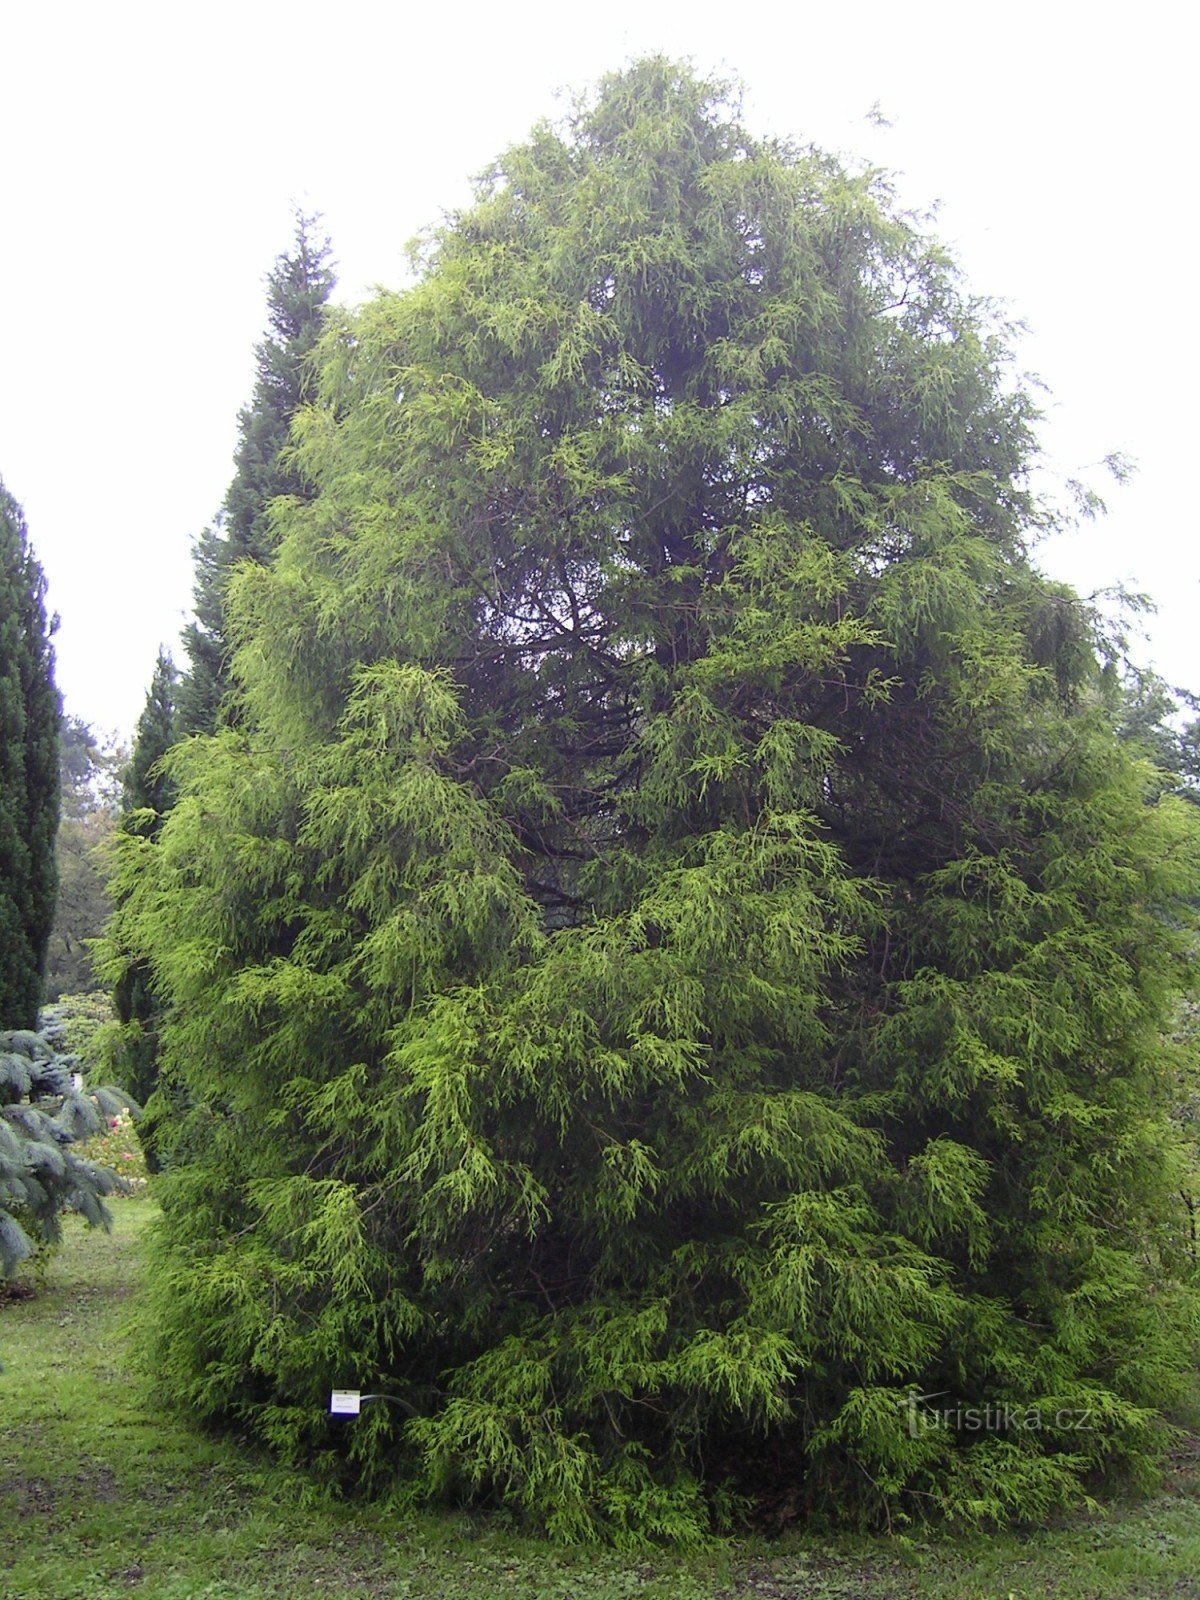 Jardín Botánico de Liberec